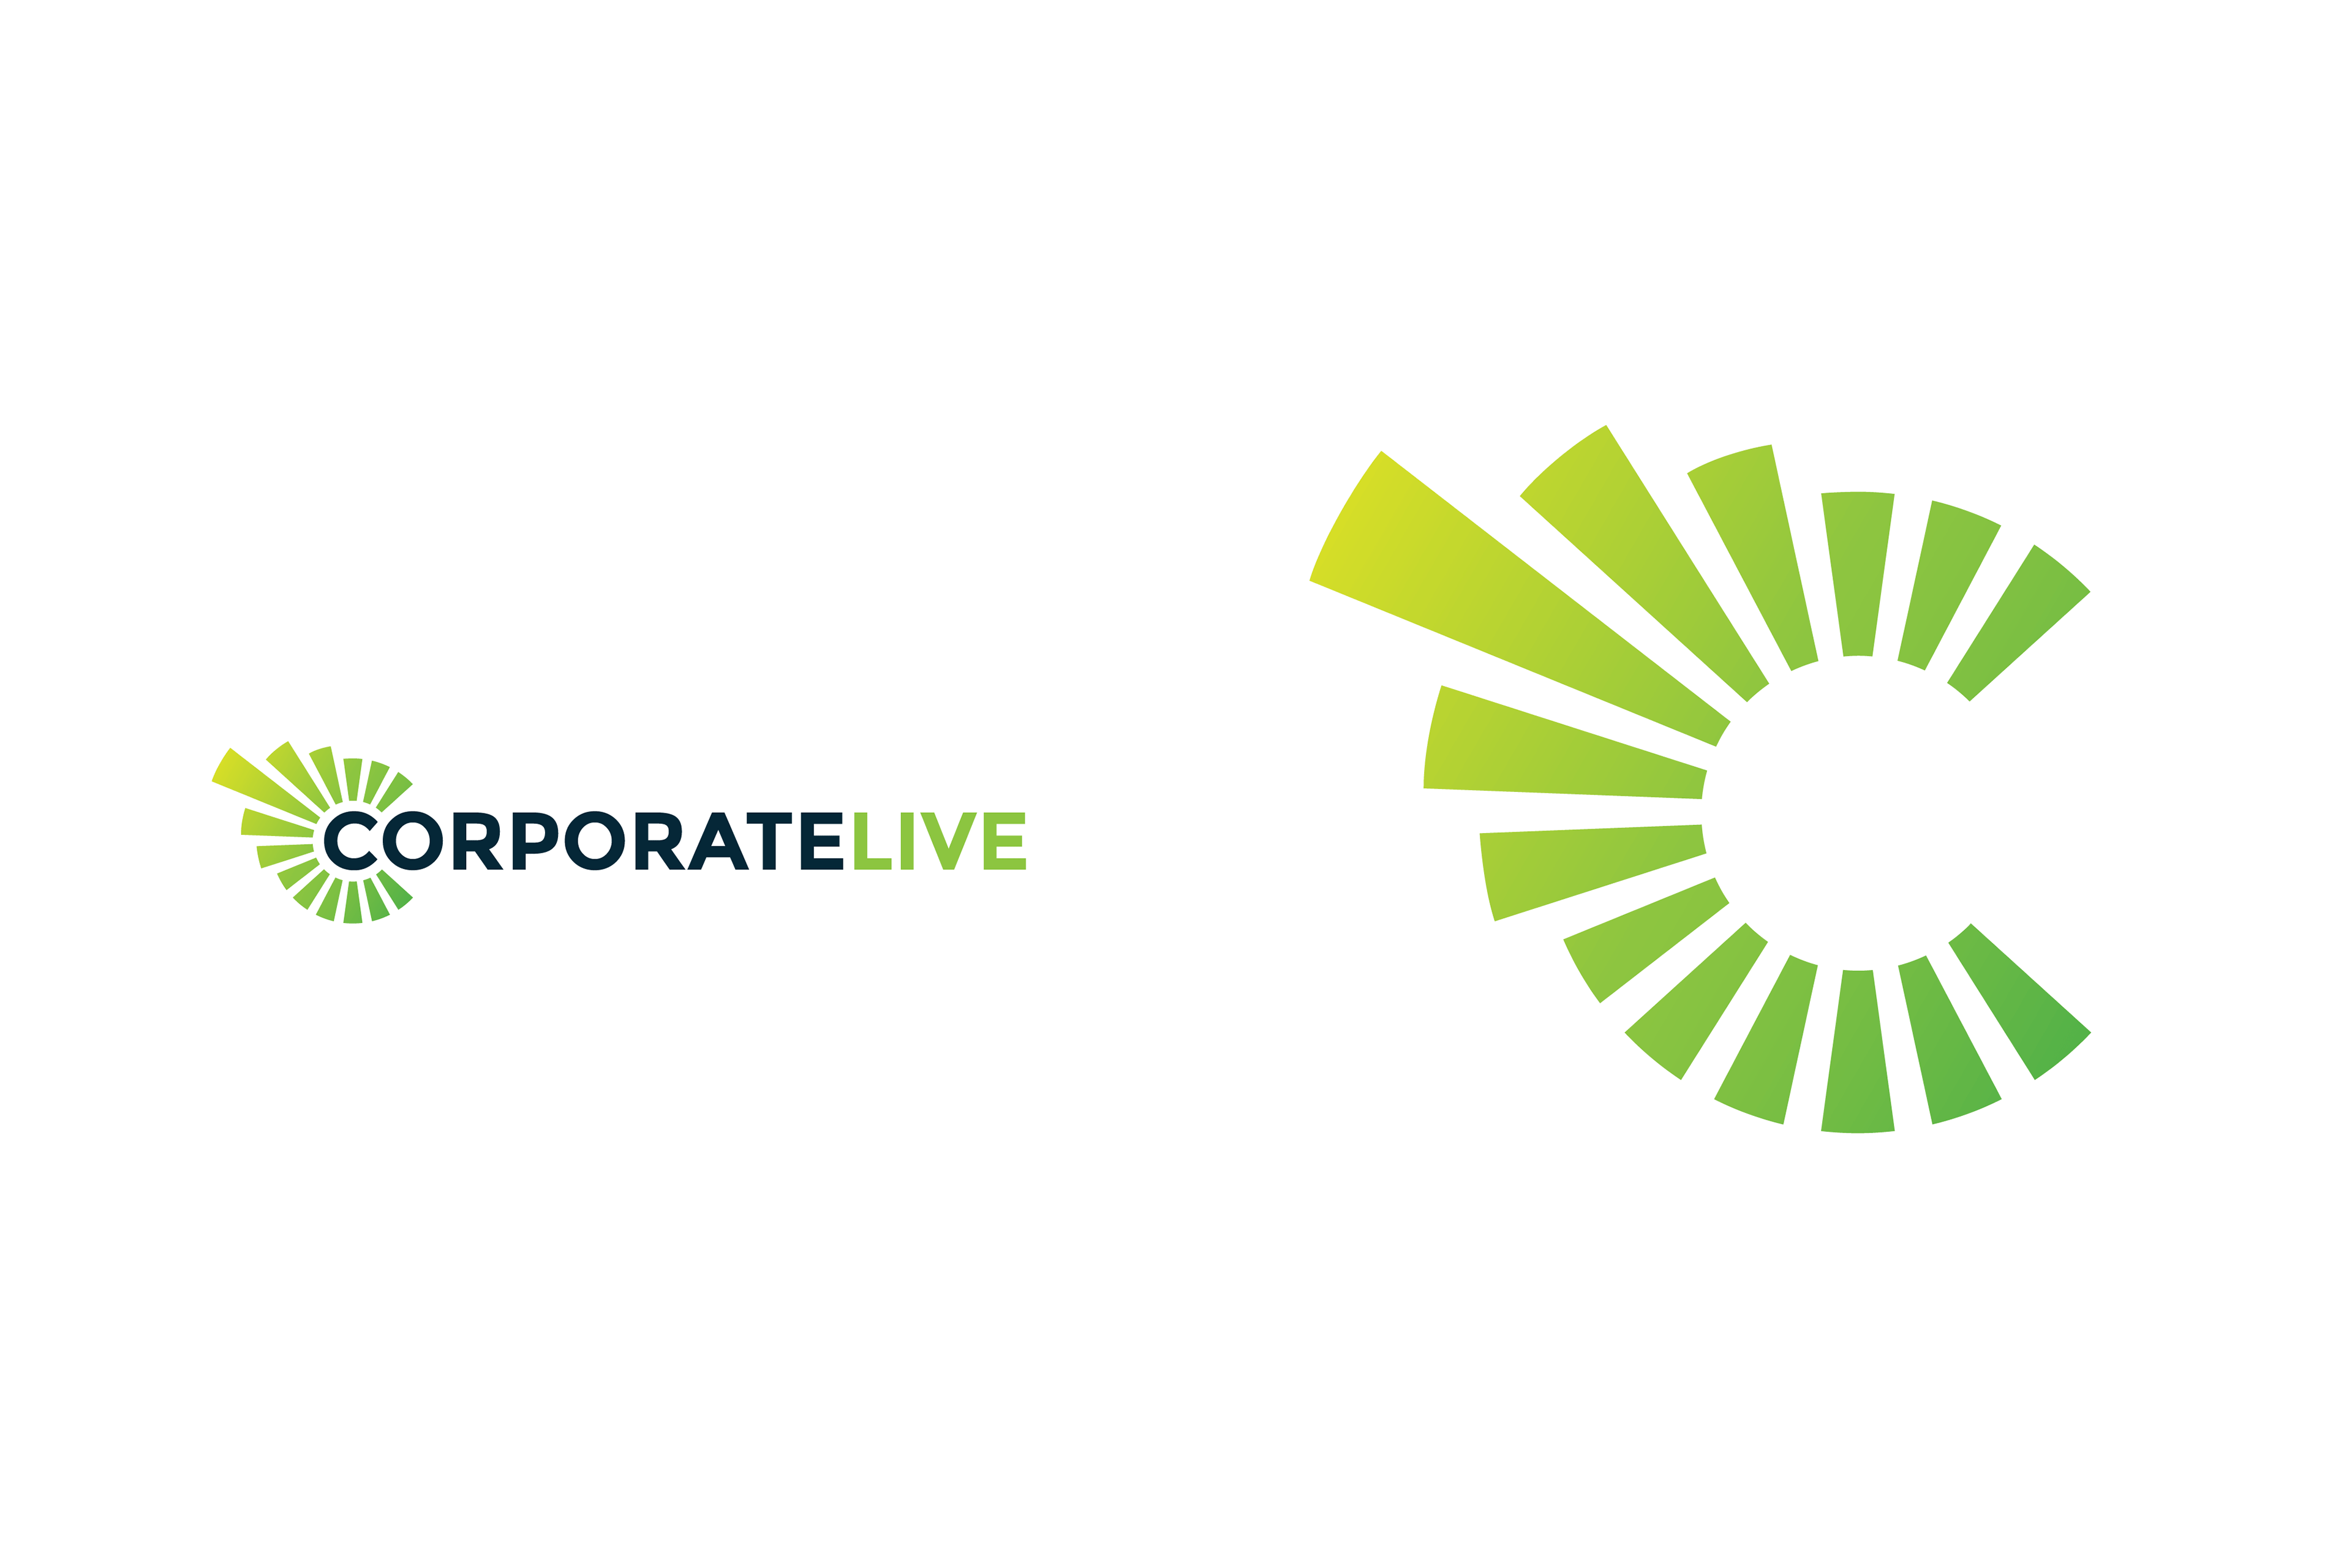 All Corporate Logo - Coe Lacy | Illustration & Design - Corporate Logo Work - 2016